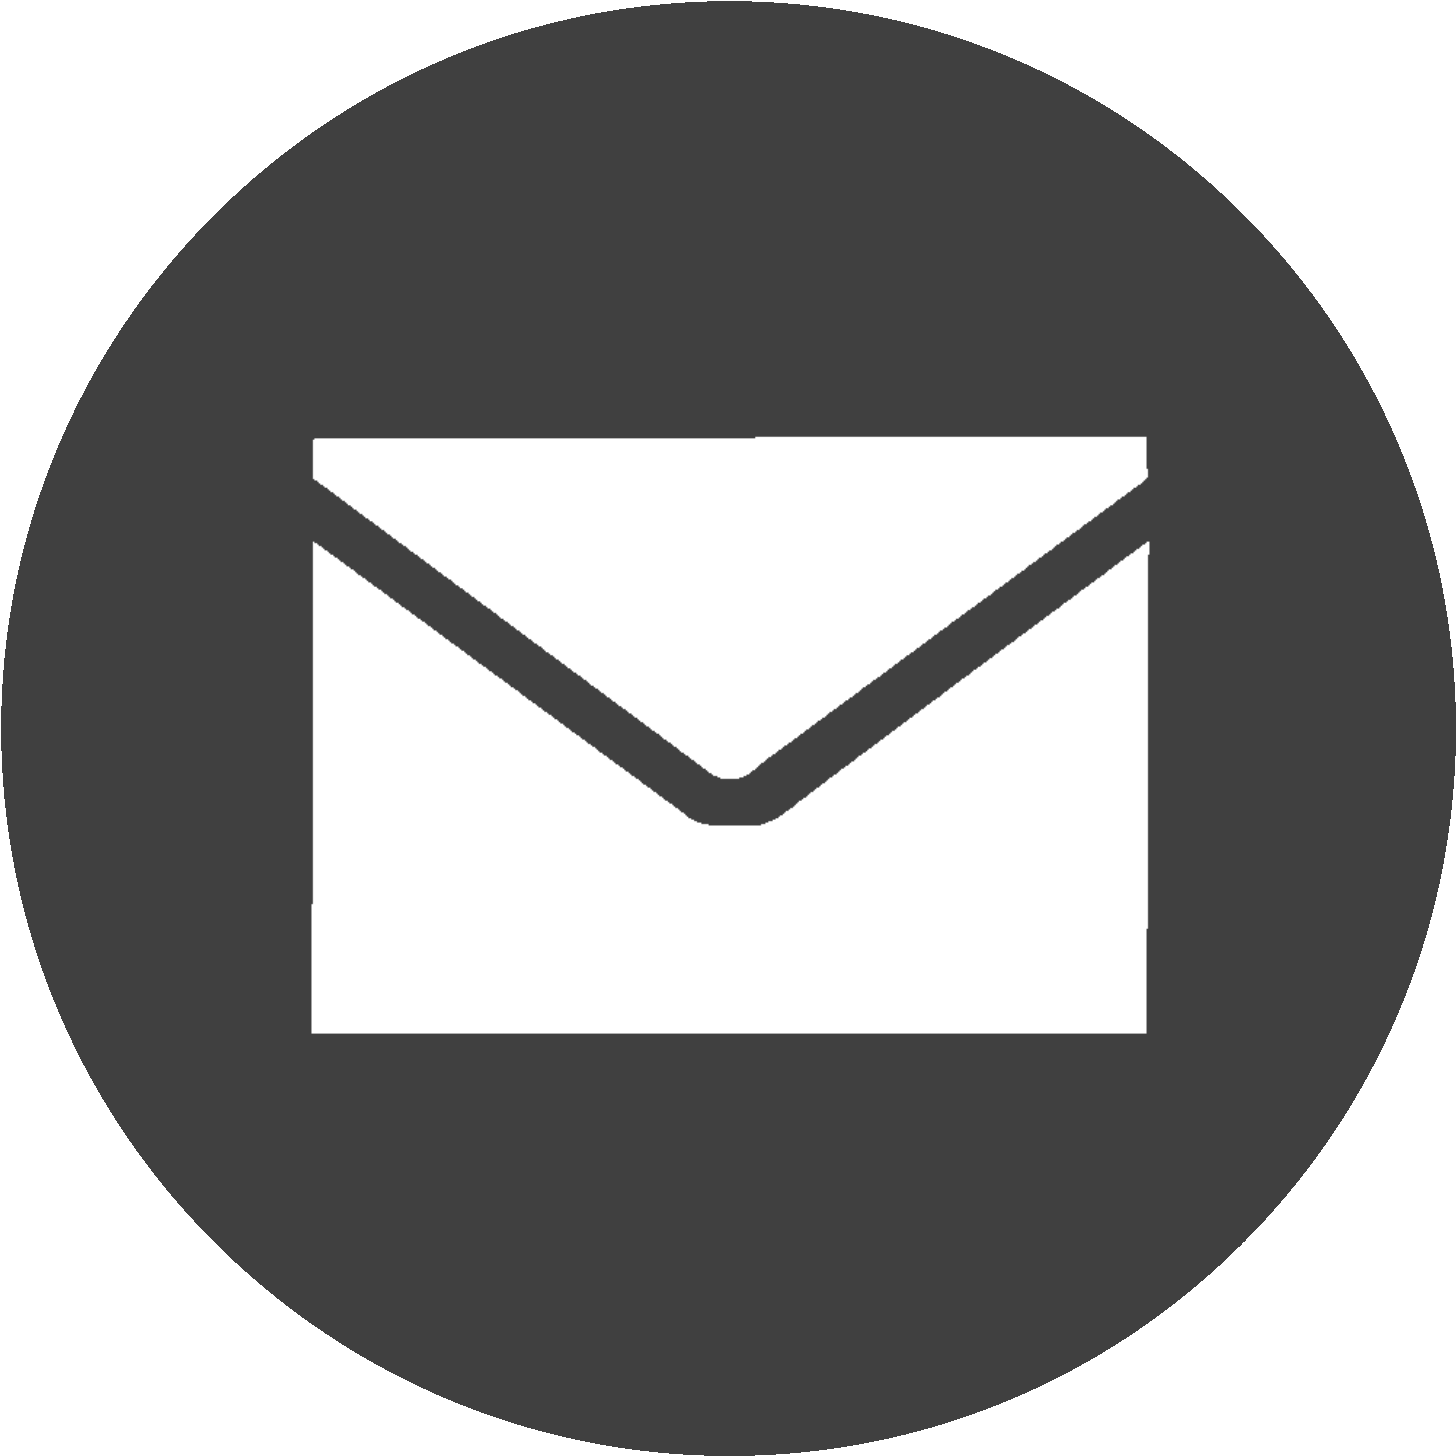 J mail. Gmail логотип. Иконка гмейл. Значок почты gmail без фона. Иконки gmail вектор.